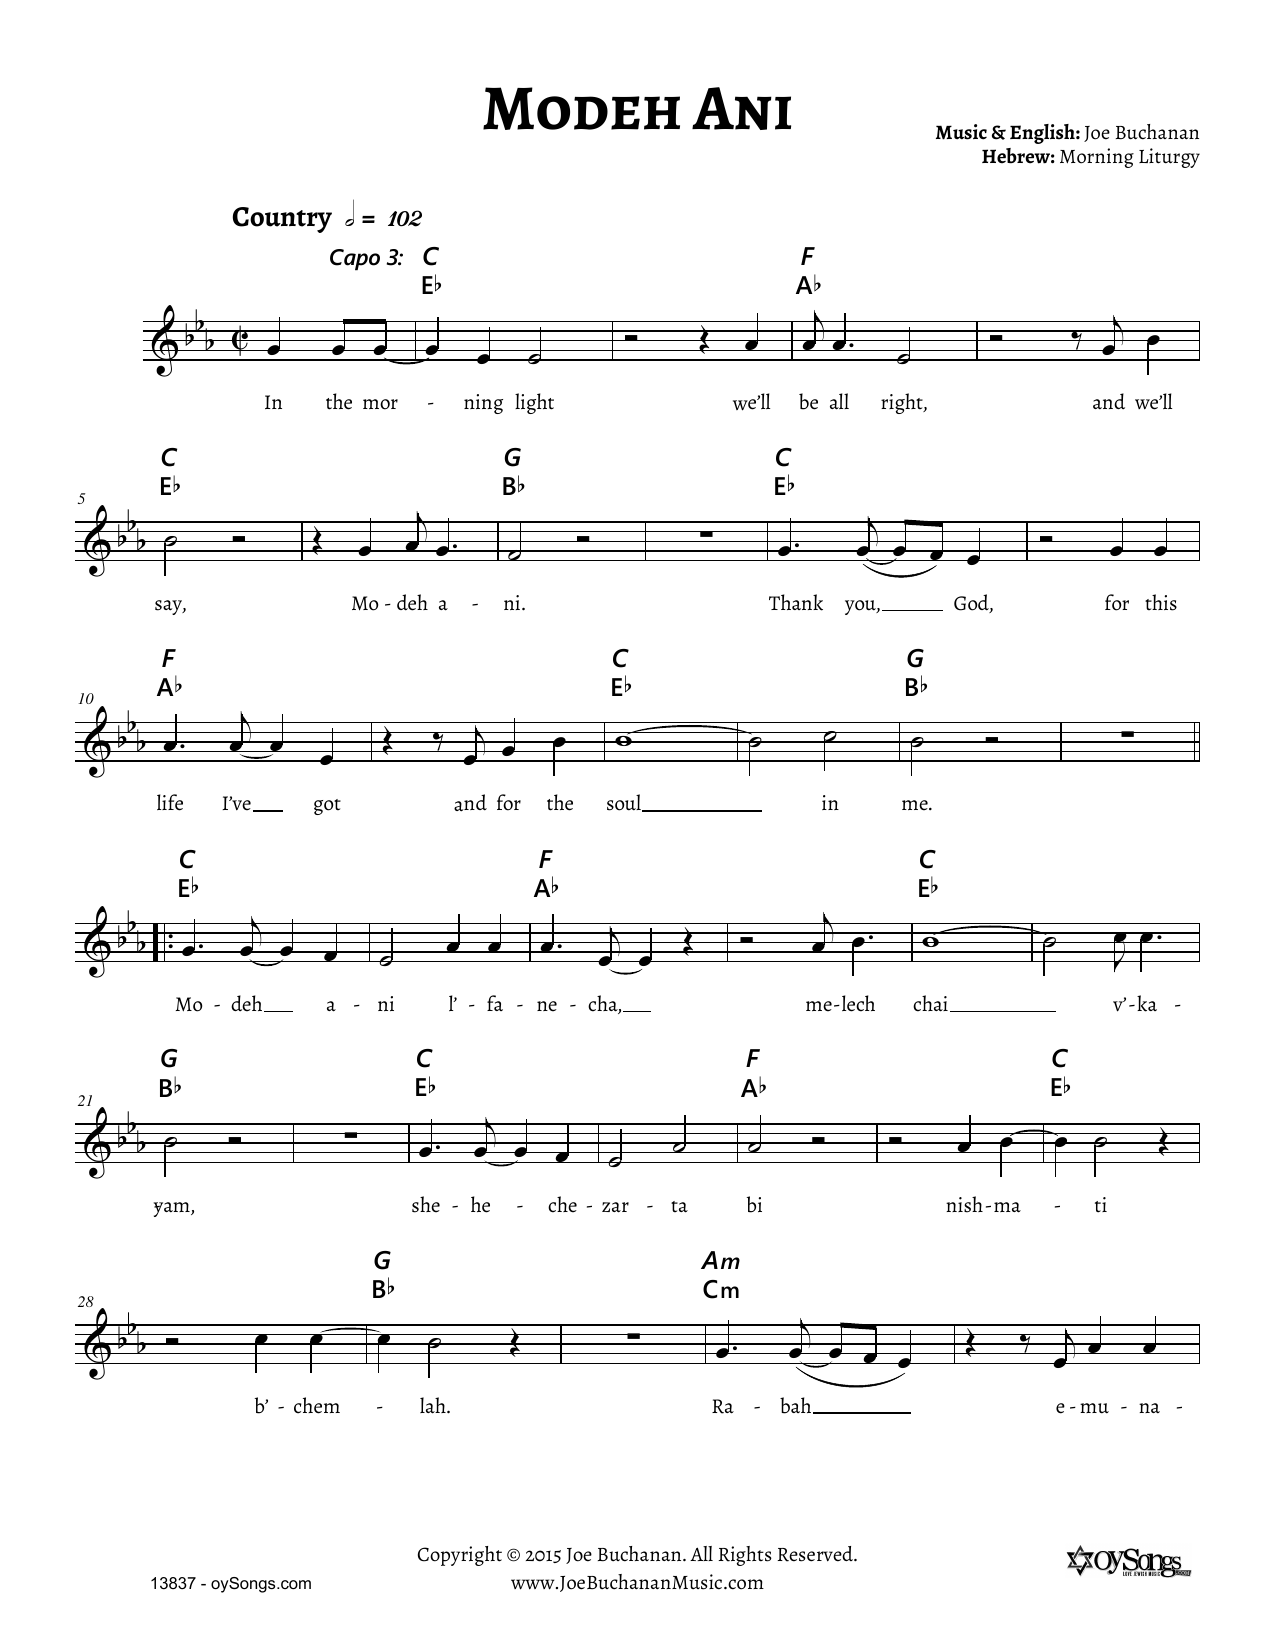 Joe Buchanan Modeh Ani Sheet Music Notes & Chords for Melody Line, Lyrics & Chords - Download or Print PDF